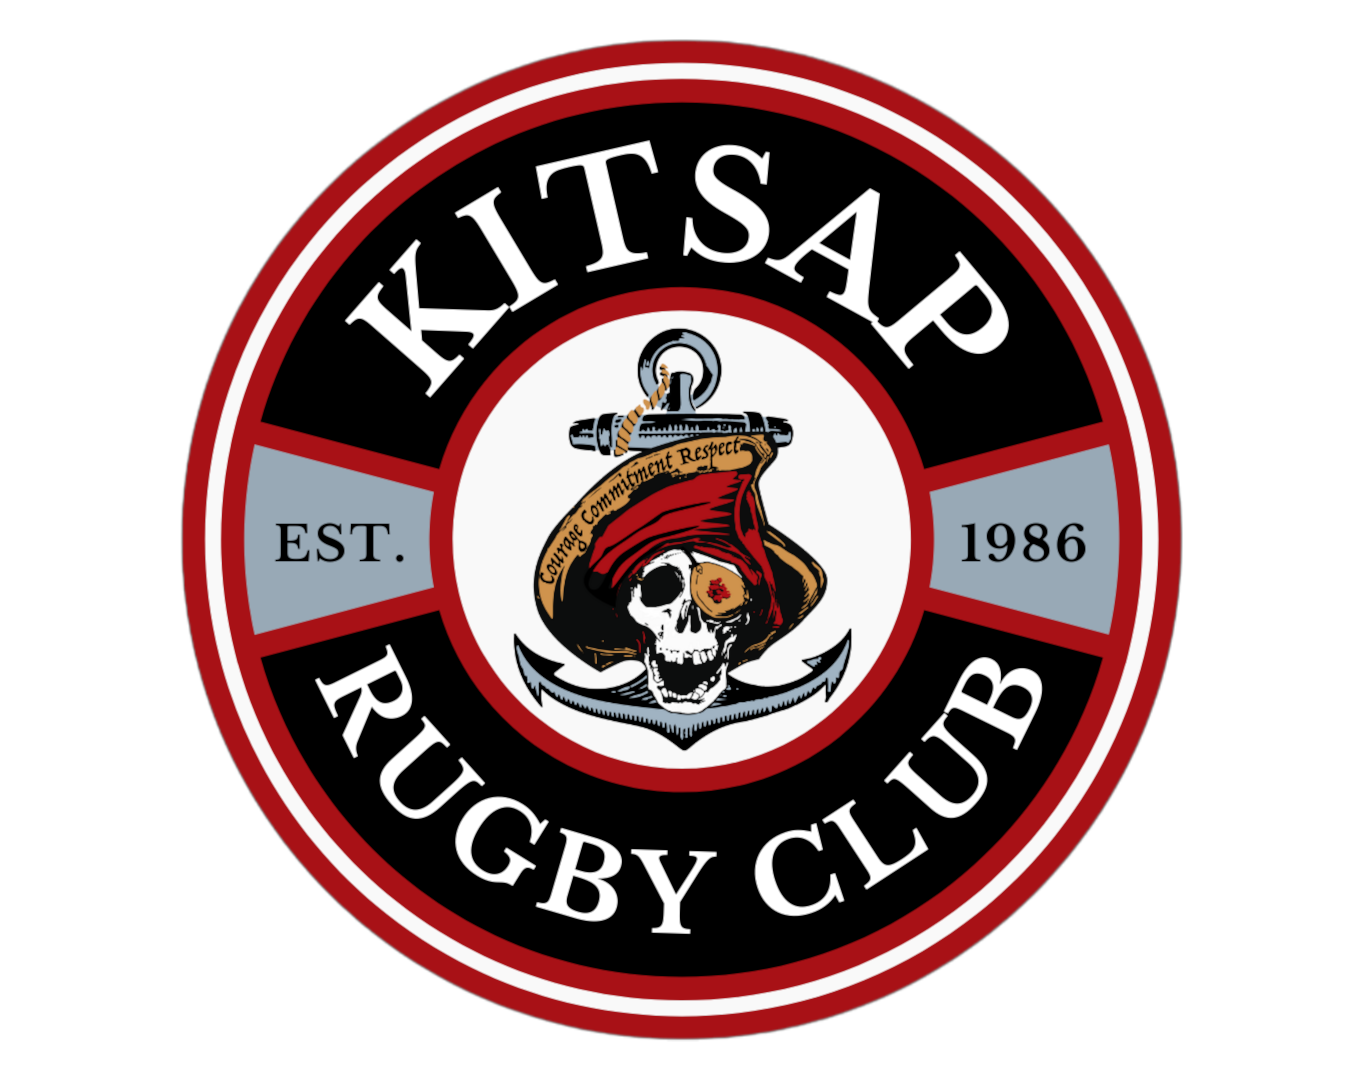 Kitsap Rugby Club